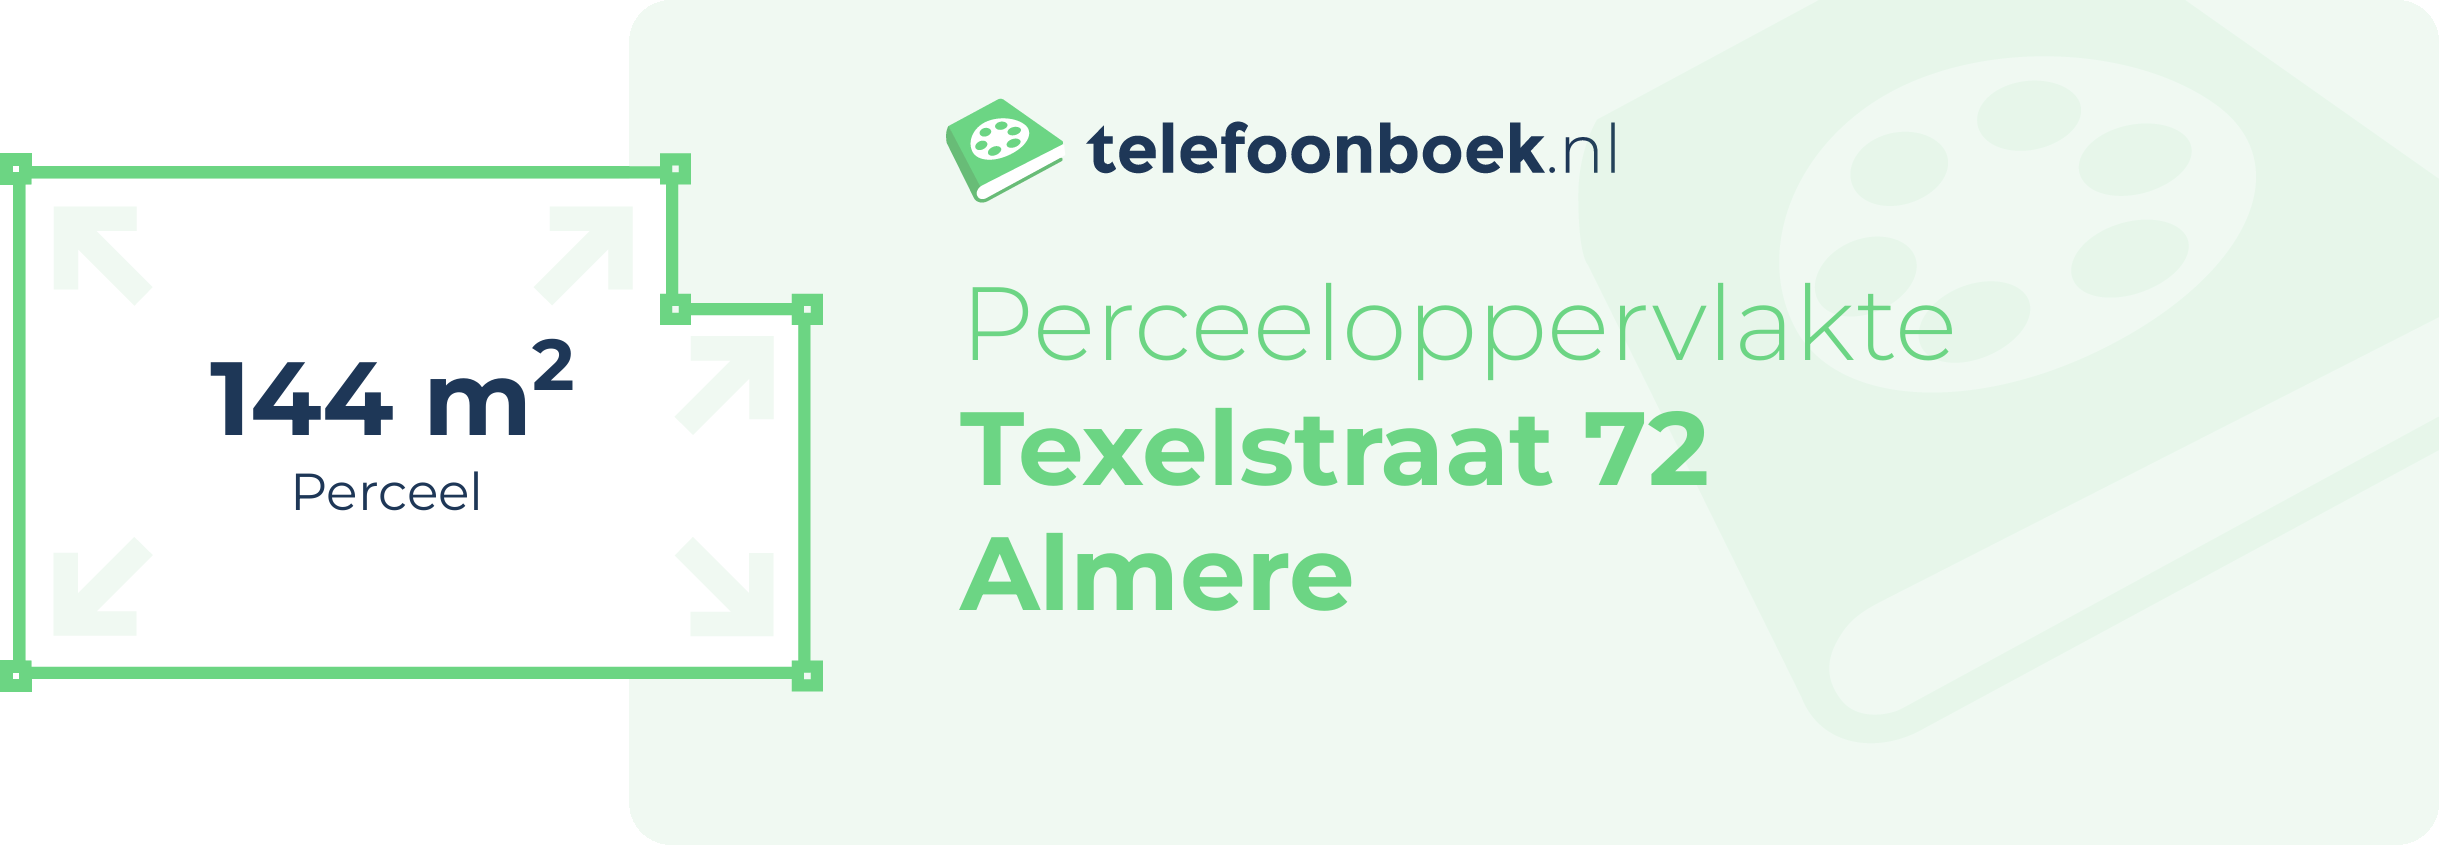 Perceeloppervlakte Texelstraat 72 Almere